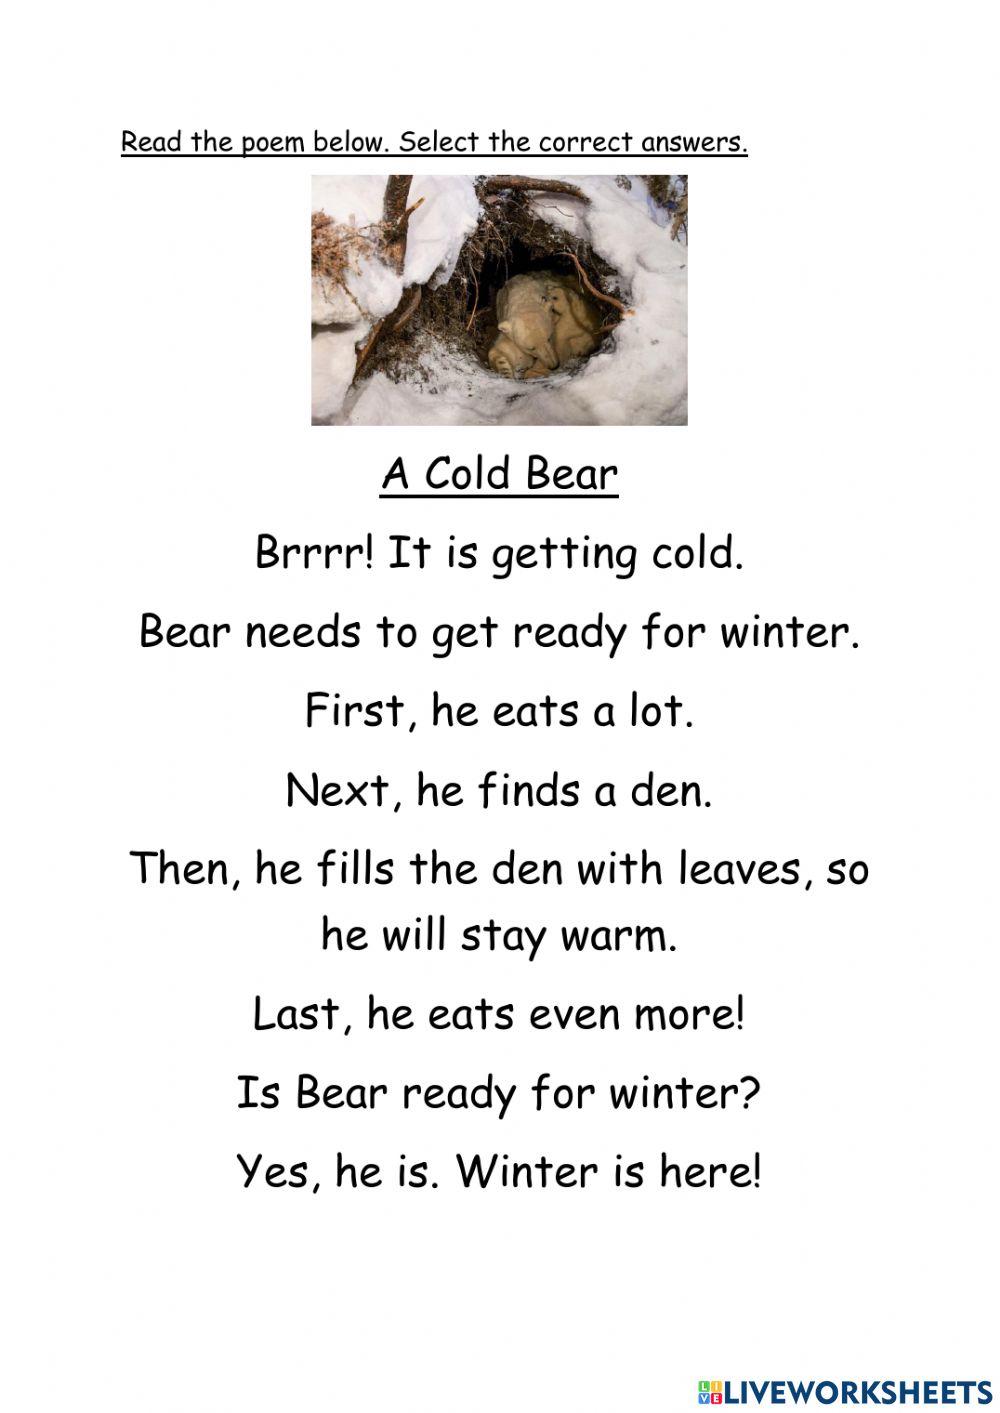 POEM: A Cold Bear